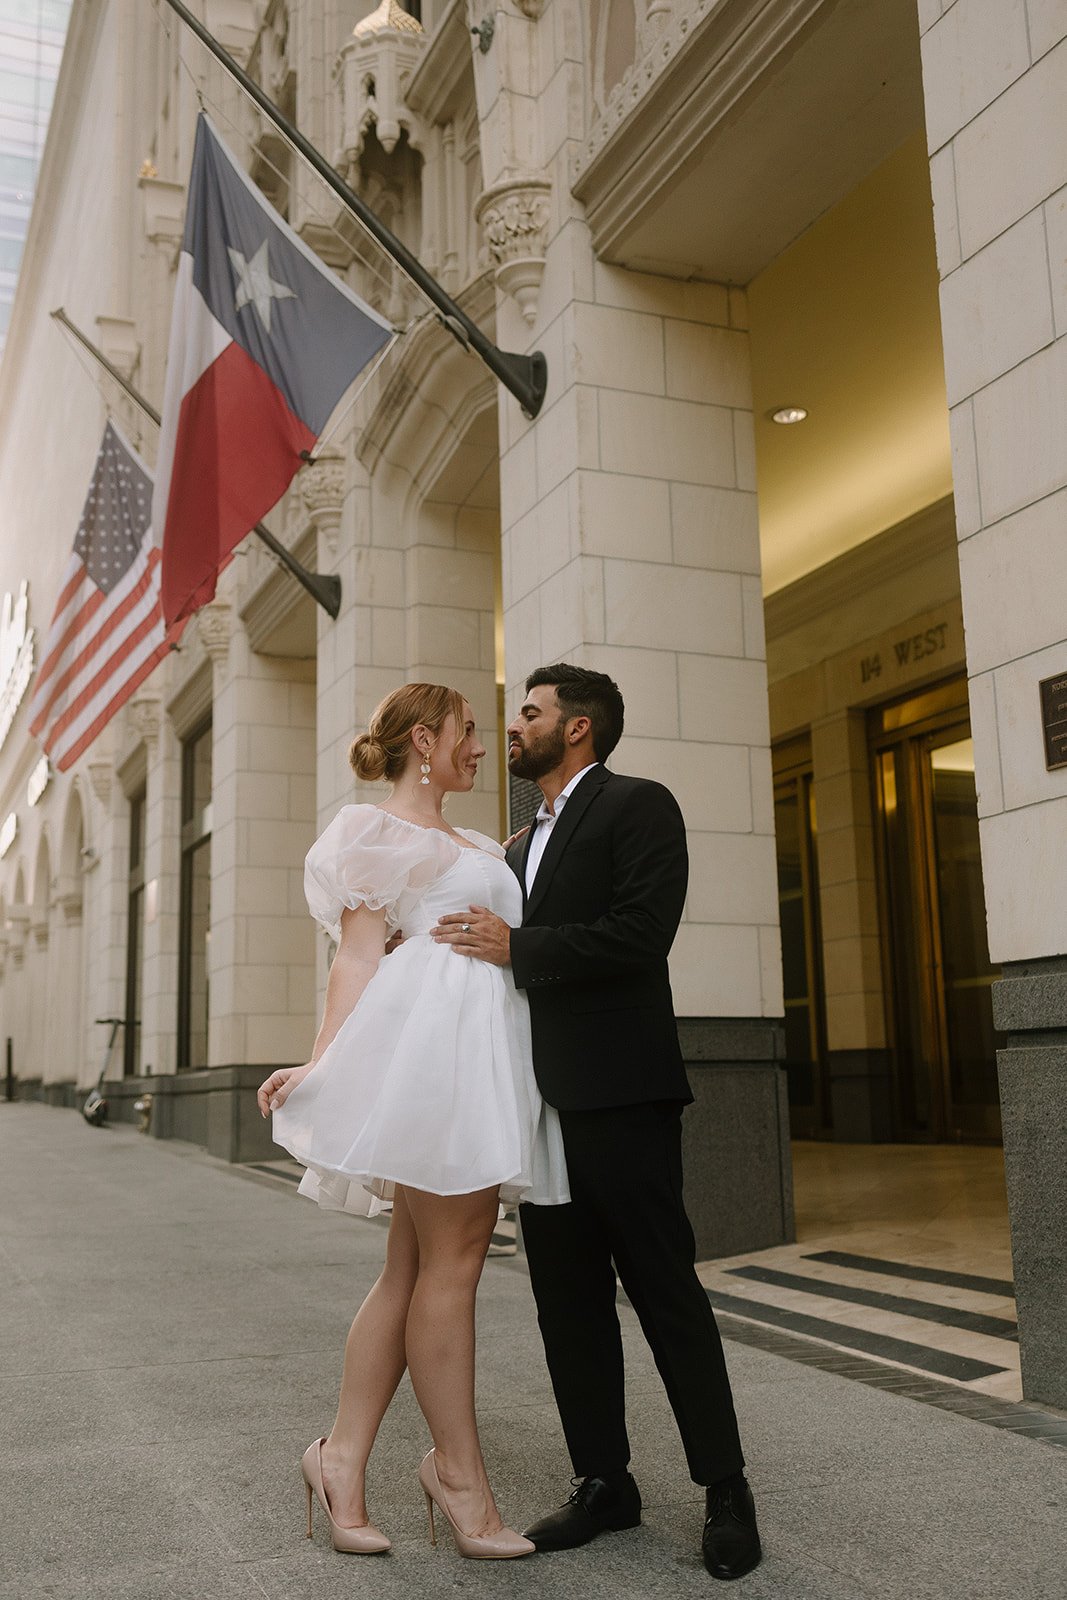 How to Plan a Downtown City Wedding in Texas - Texas Wedding Photographer - Natalie Nicole Photo (8).jpg